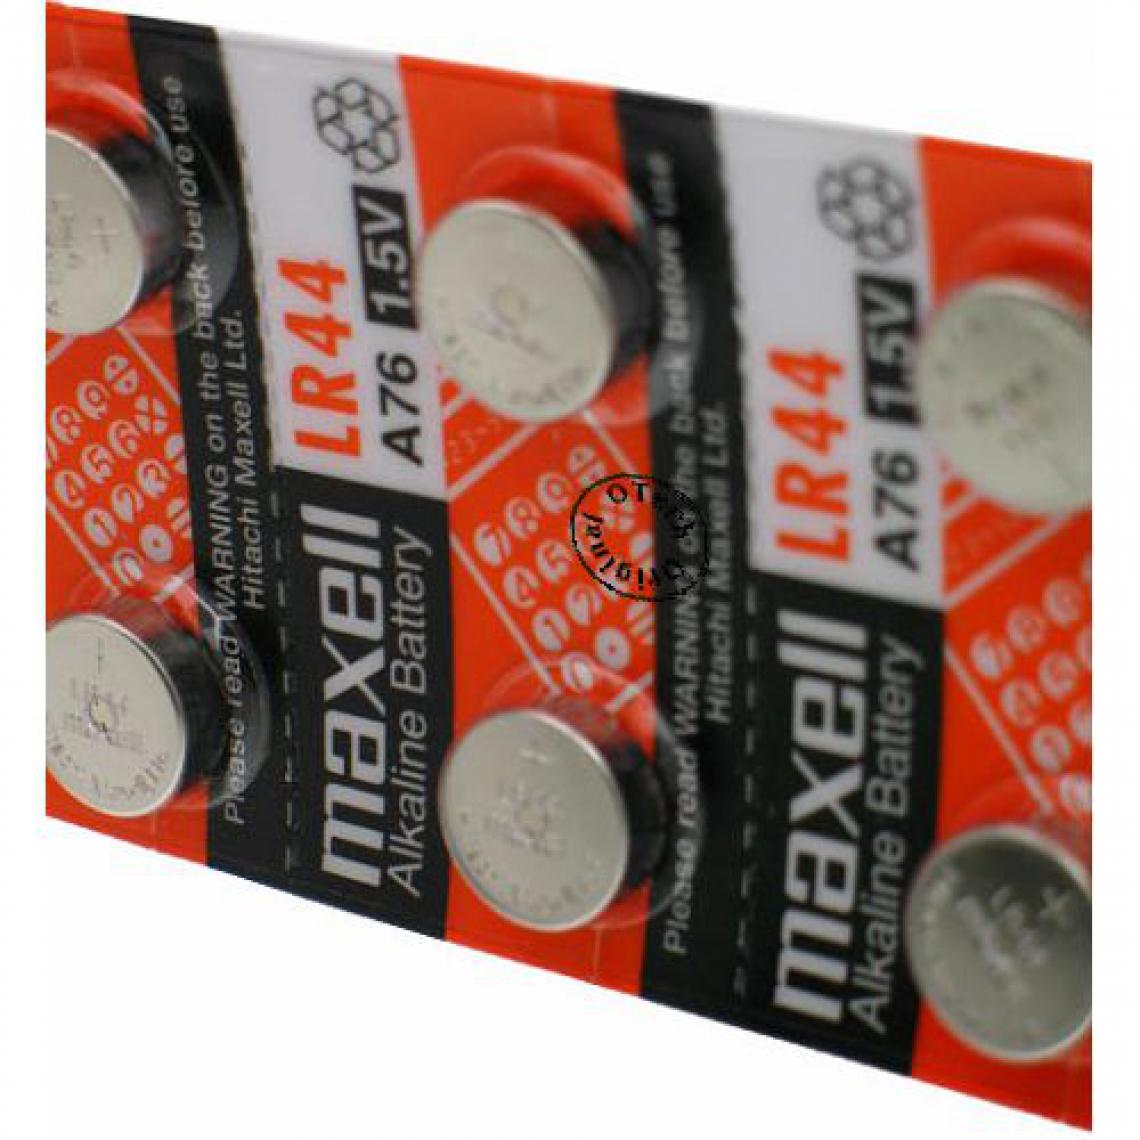 Otech - Pack de 10 piles maxell pour MAXELL KA76 - Piles rechargeables